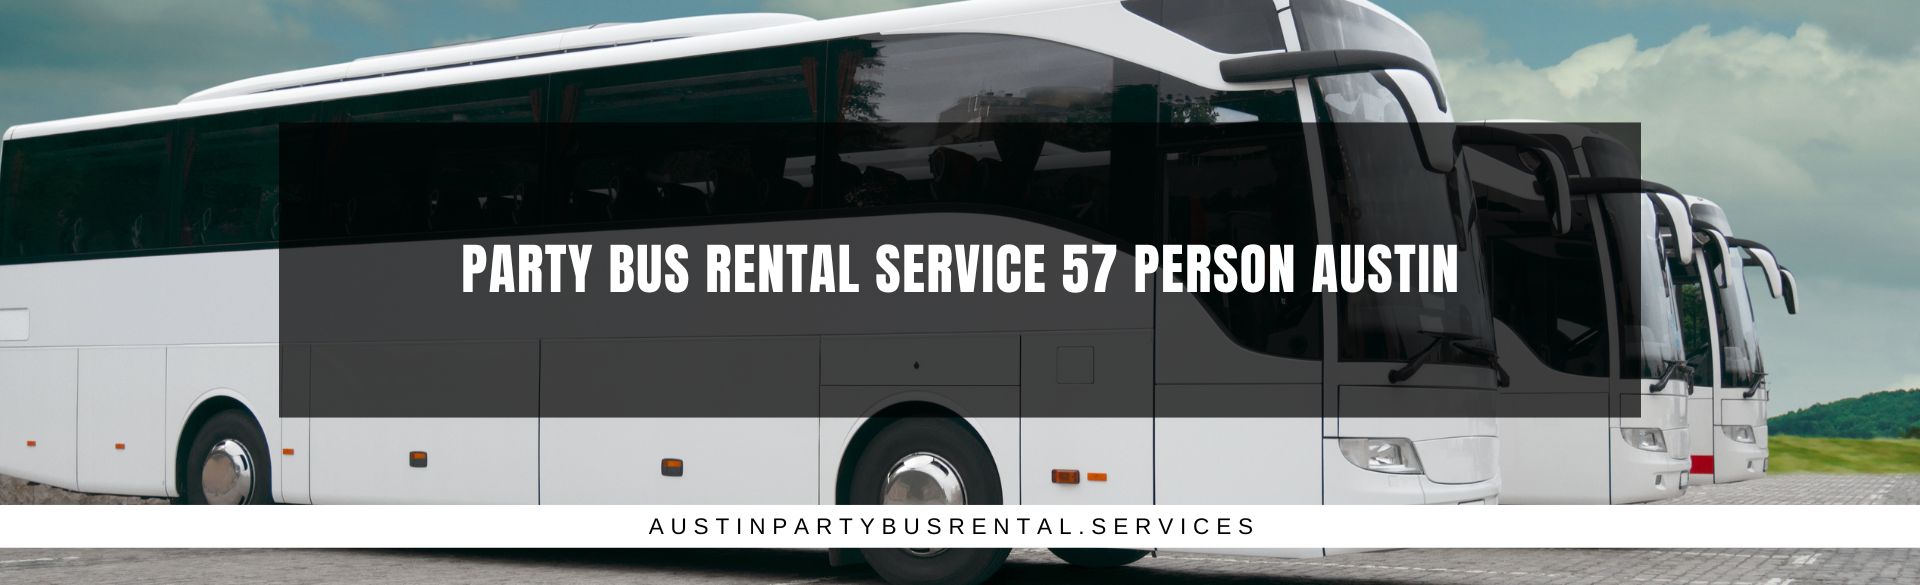 Party Bus Rental Service 57 Person Austin